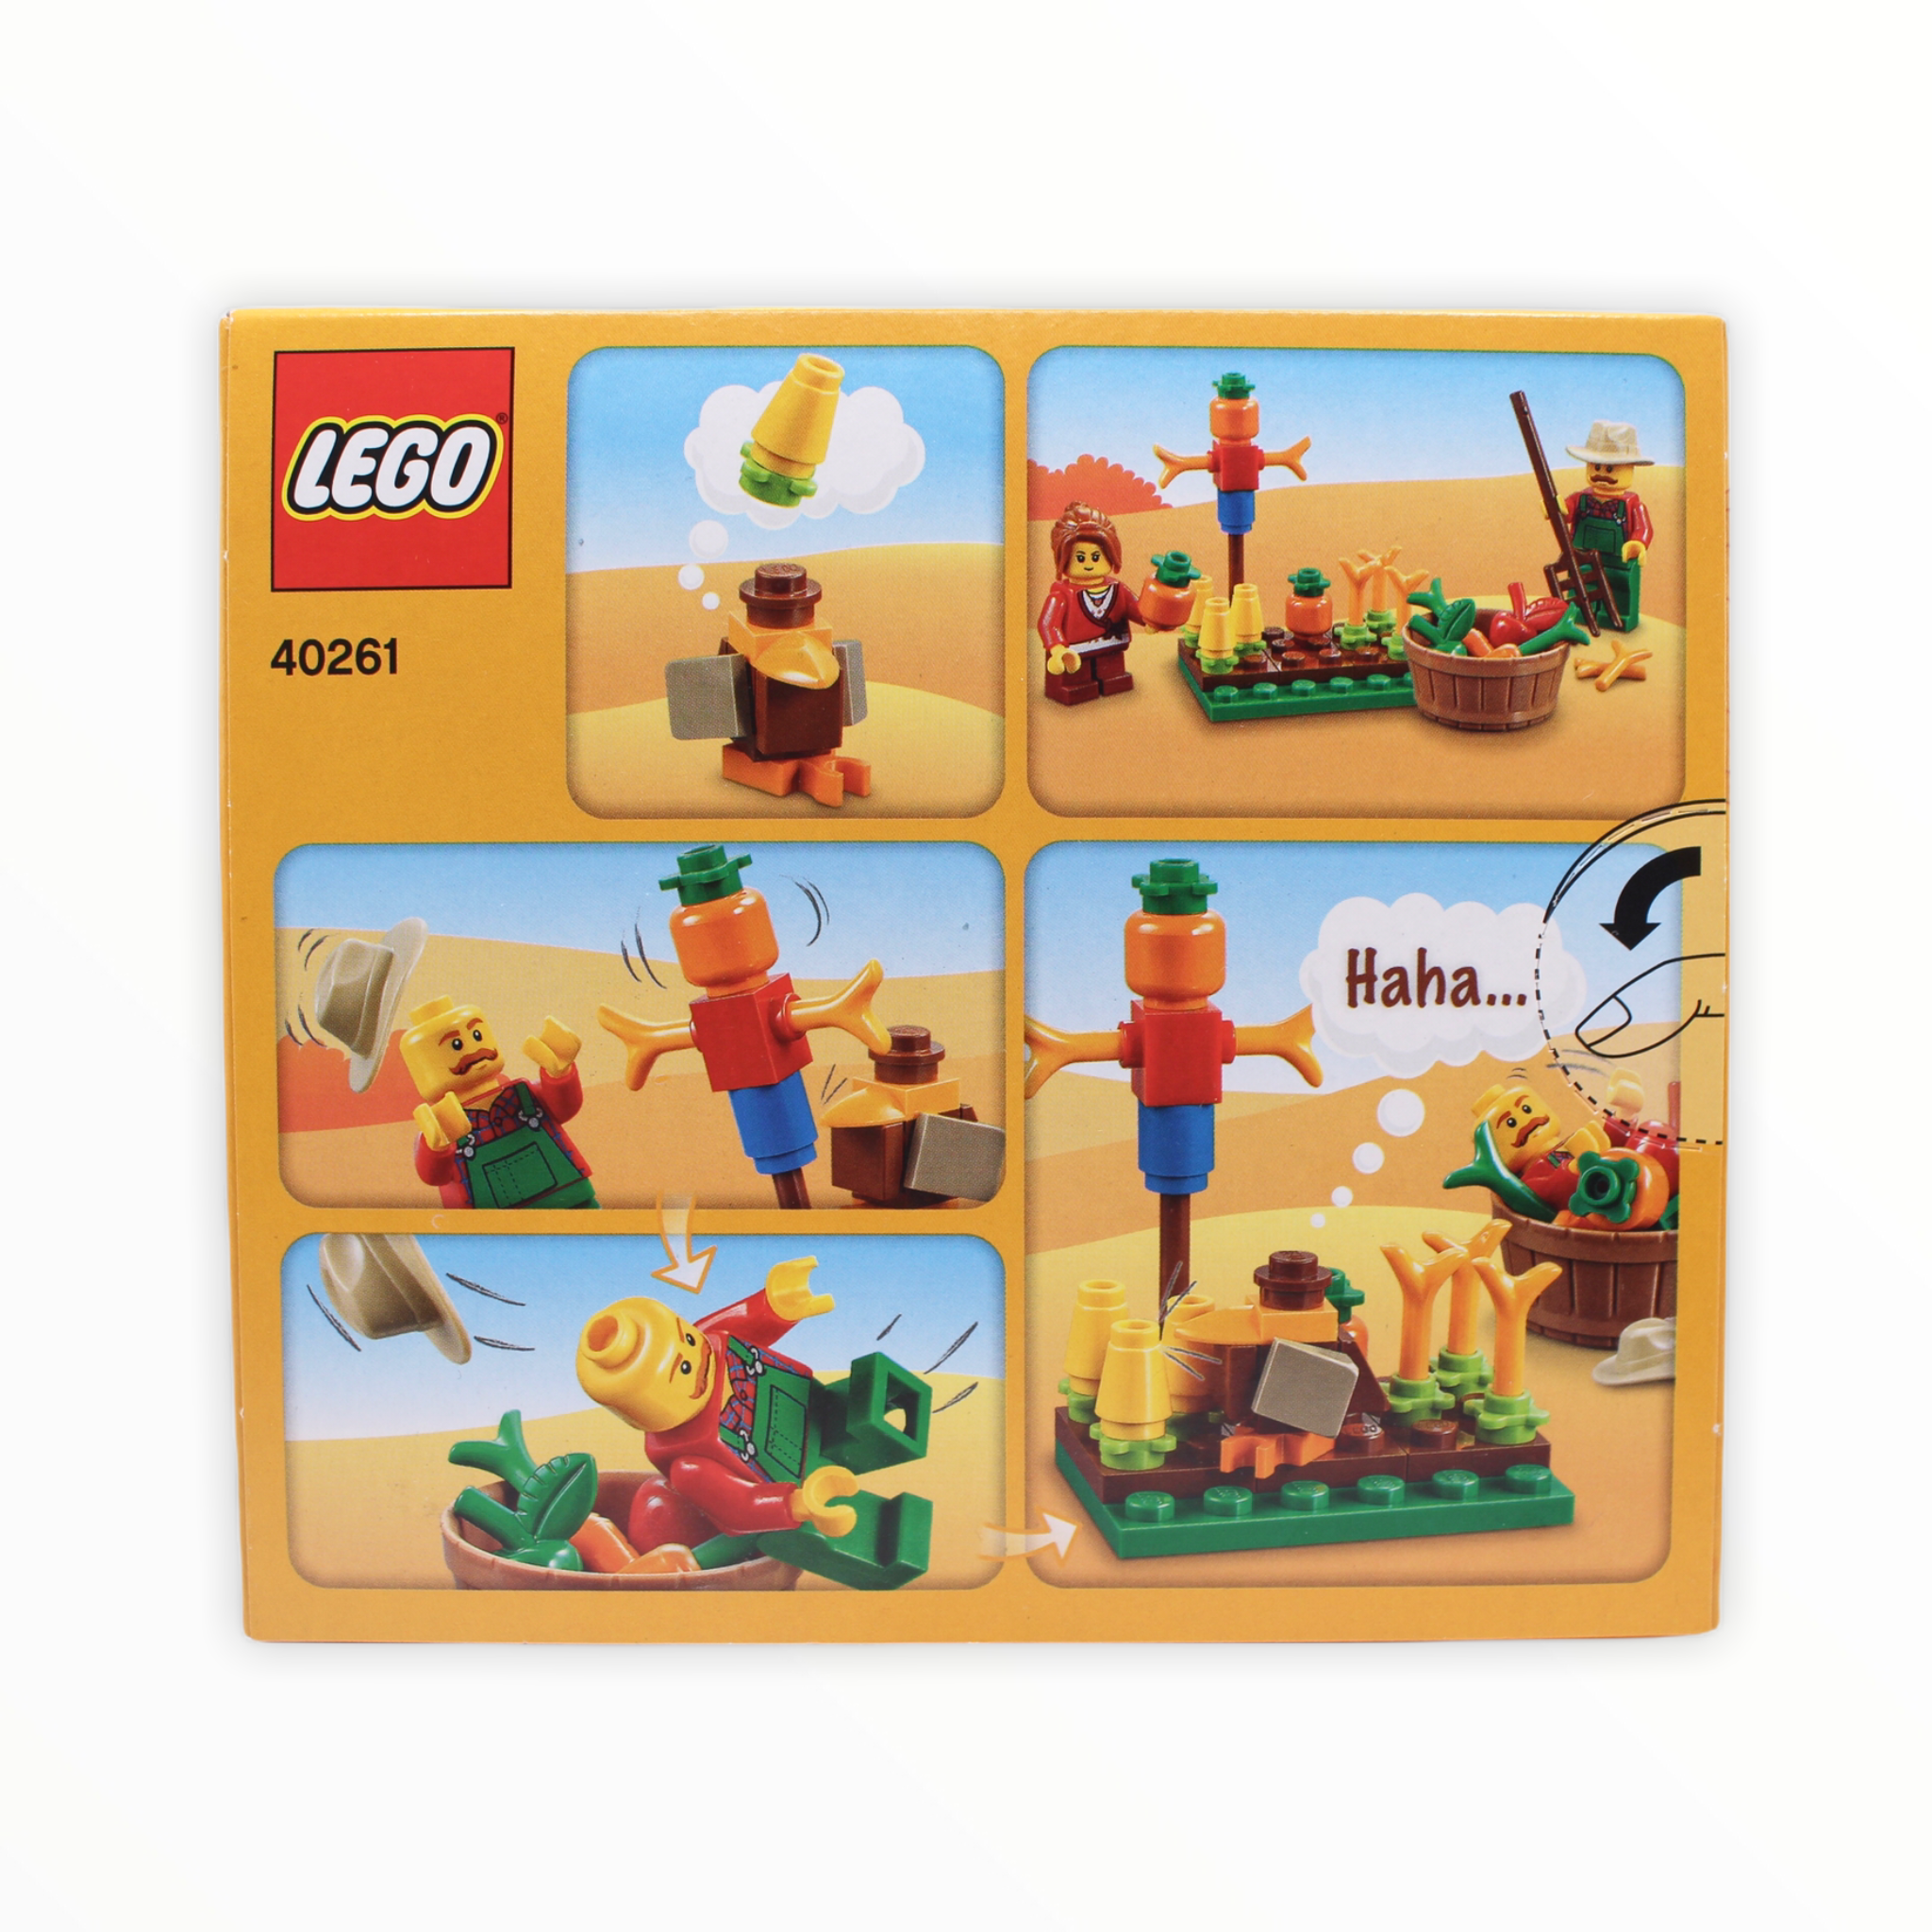 Retired Set 40261 LEGO Thanksgiving